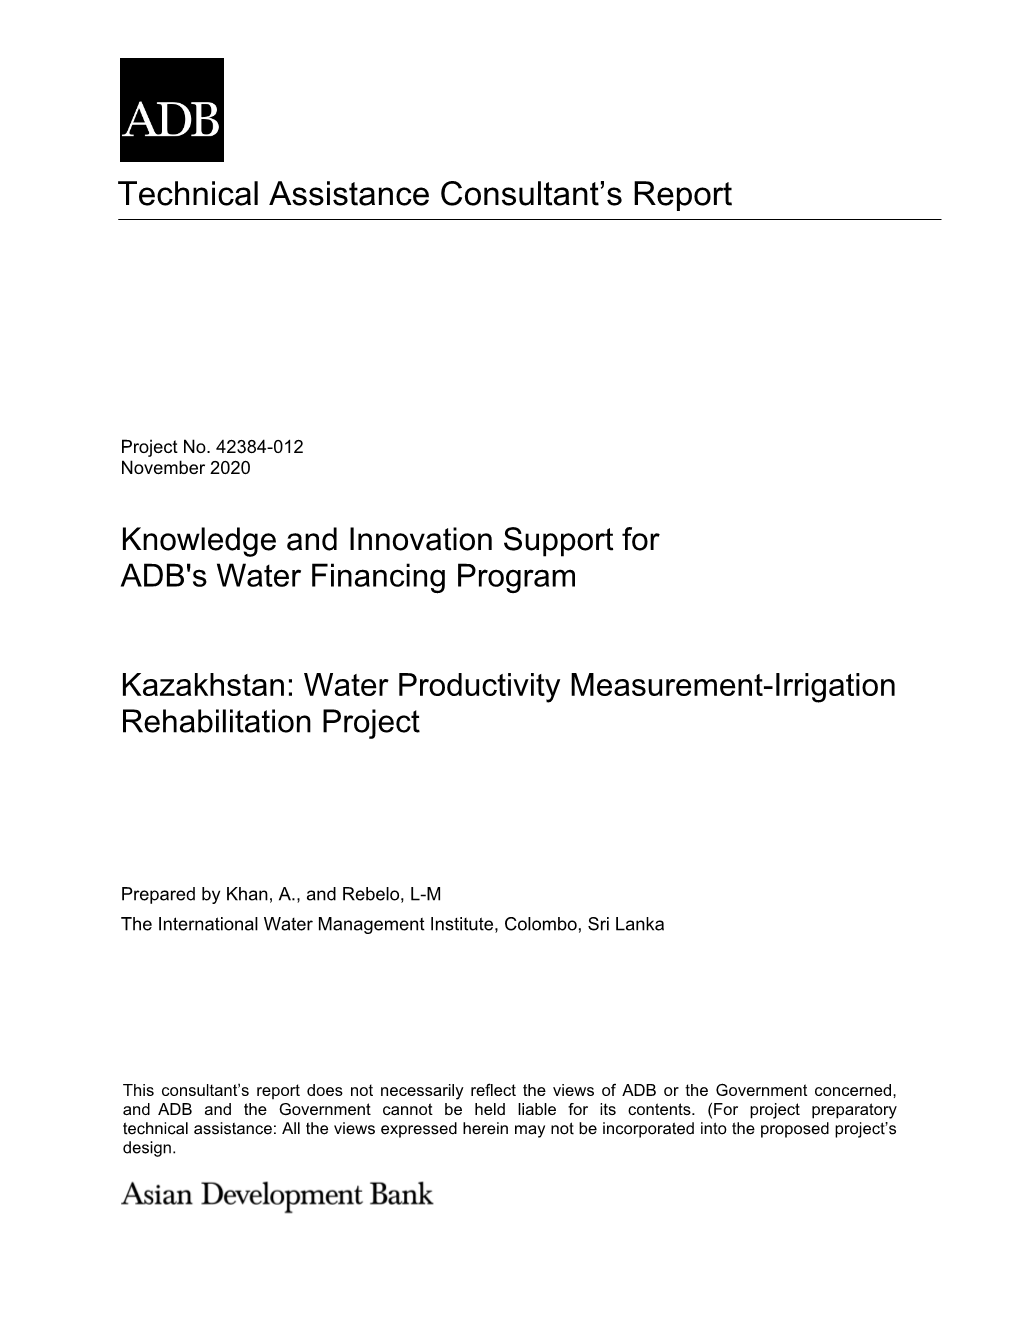 Remote Sensing Based Water Productivity Assessment: Final Project Report, Karaghandy, Kazakhstan; IWMI, Colombo, Sri Lanka